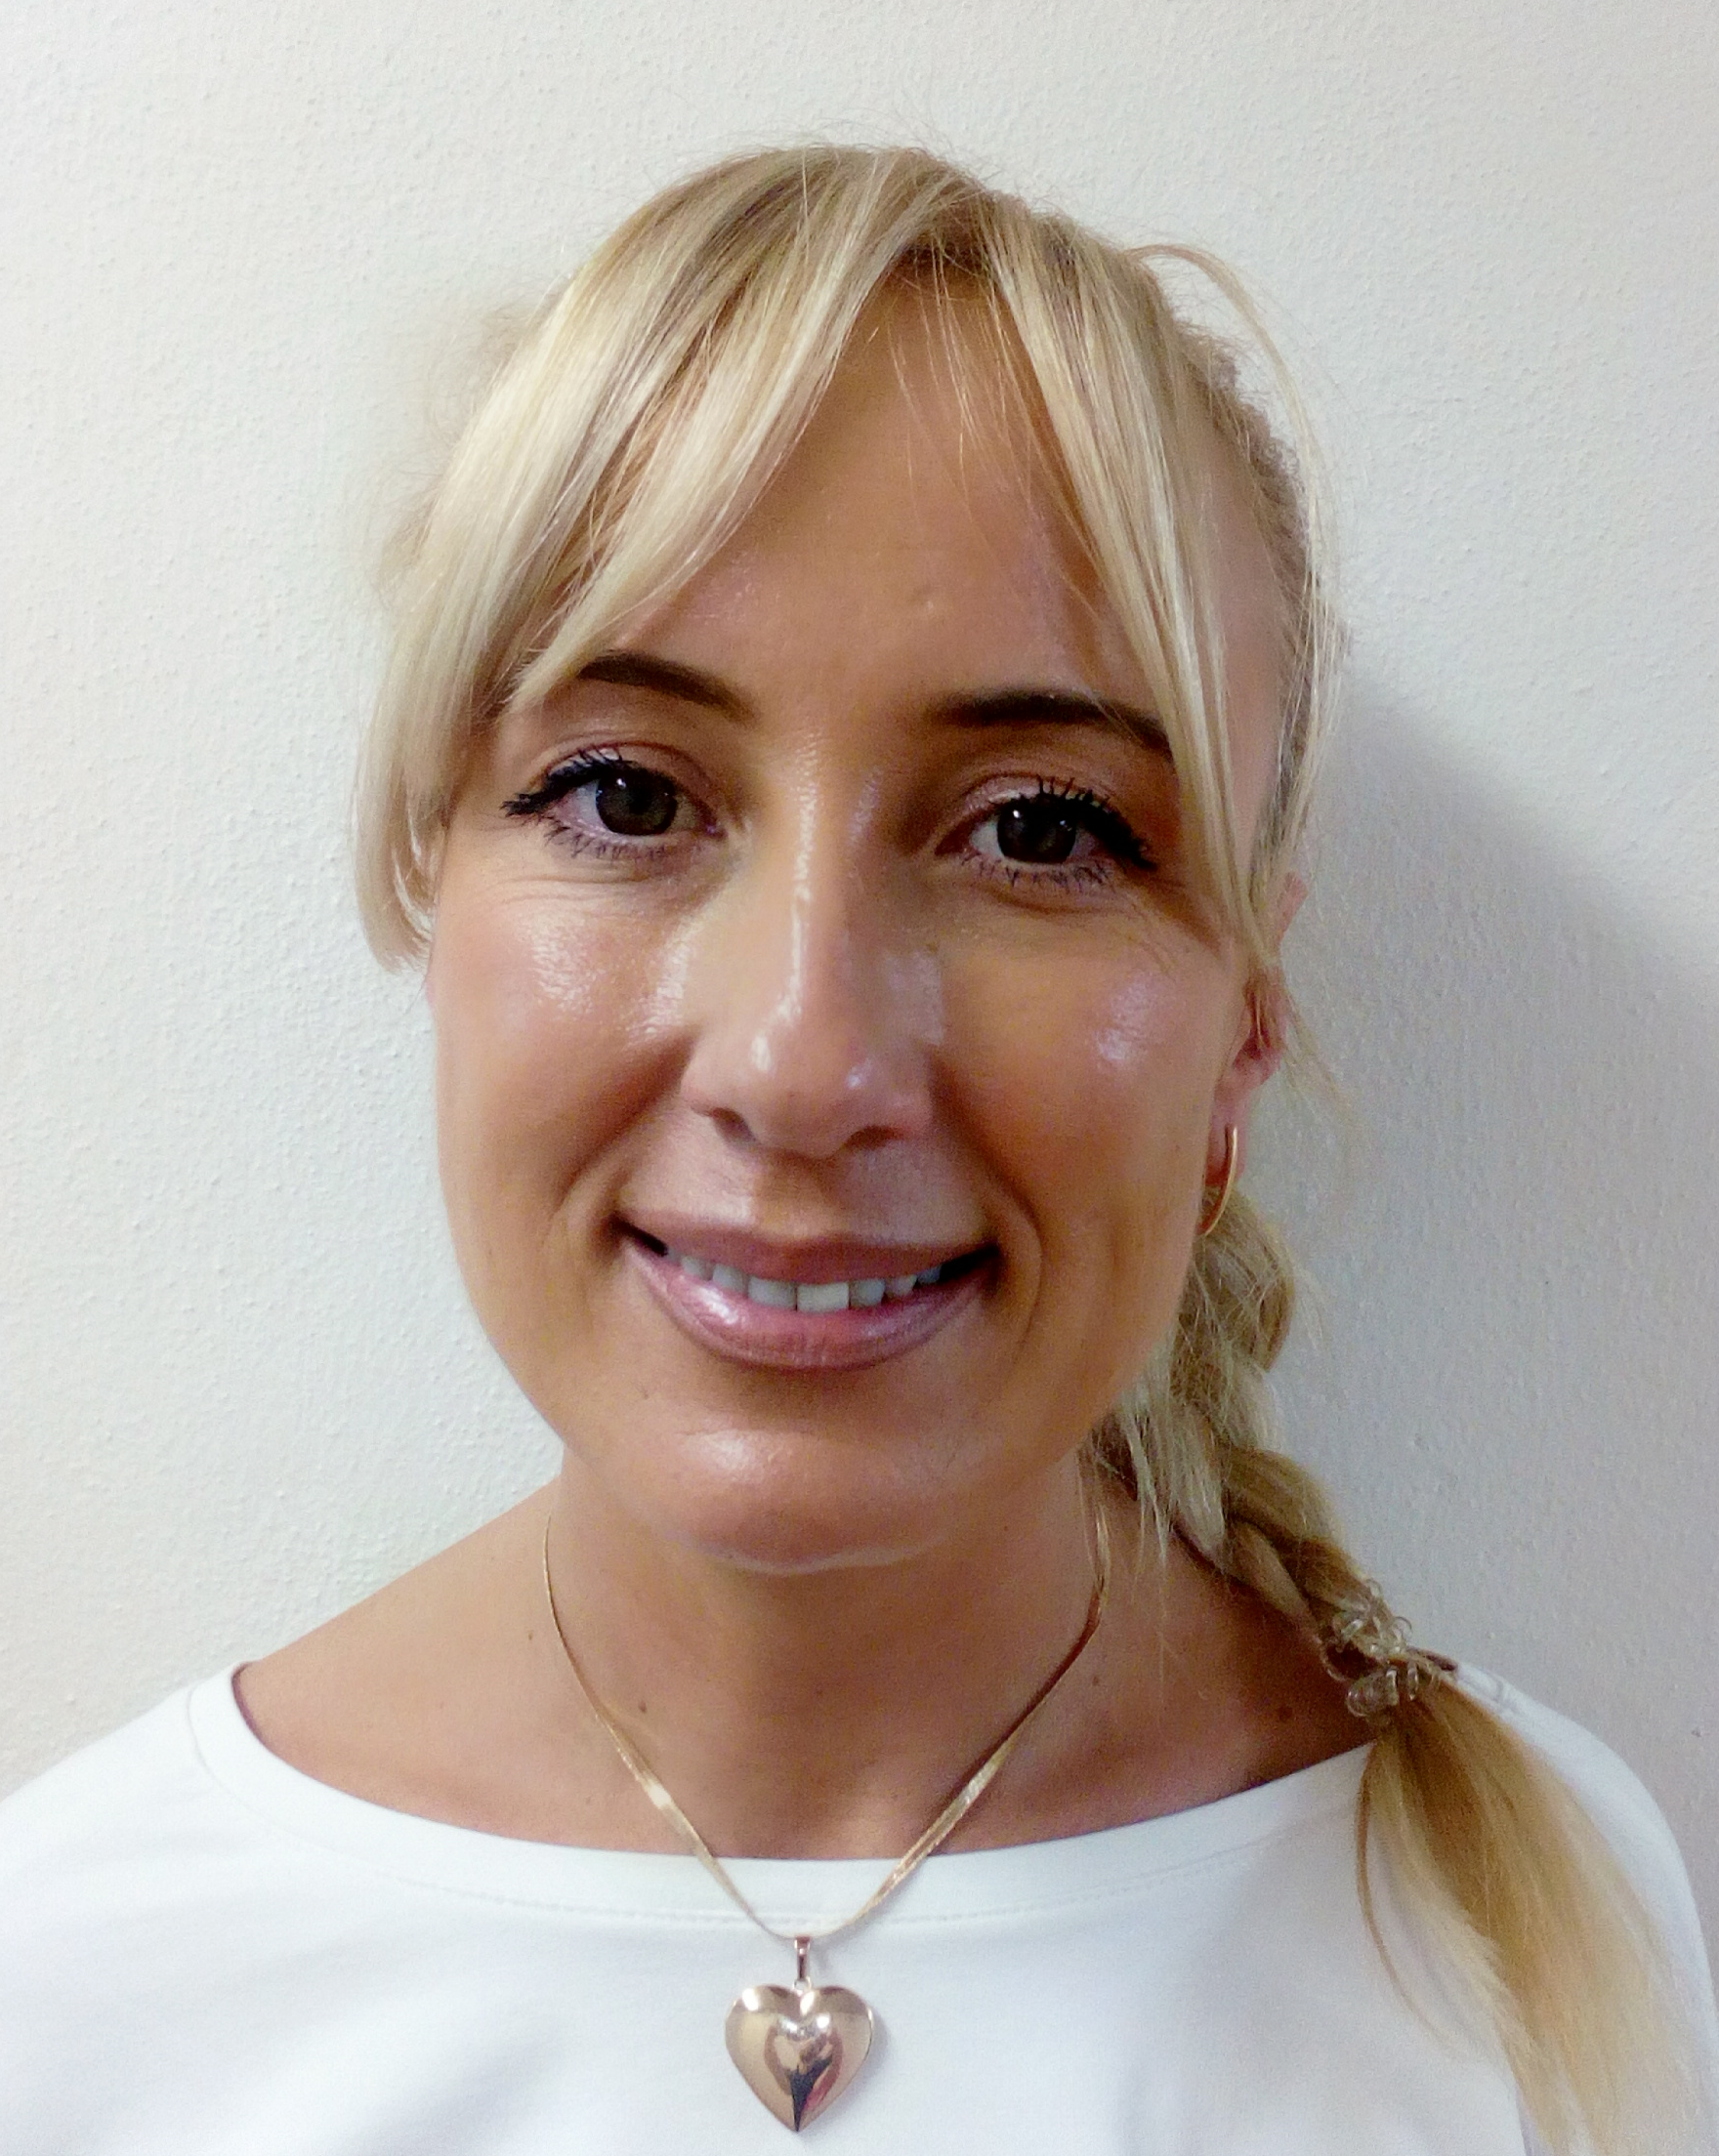 MUDr. Gabriela Grumelová - Sochorová